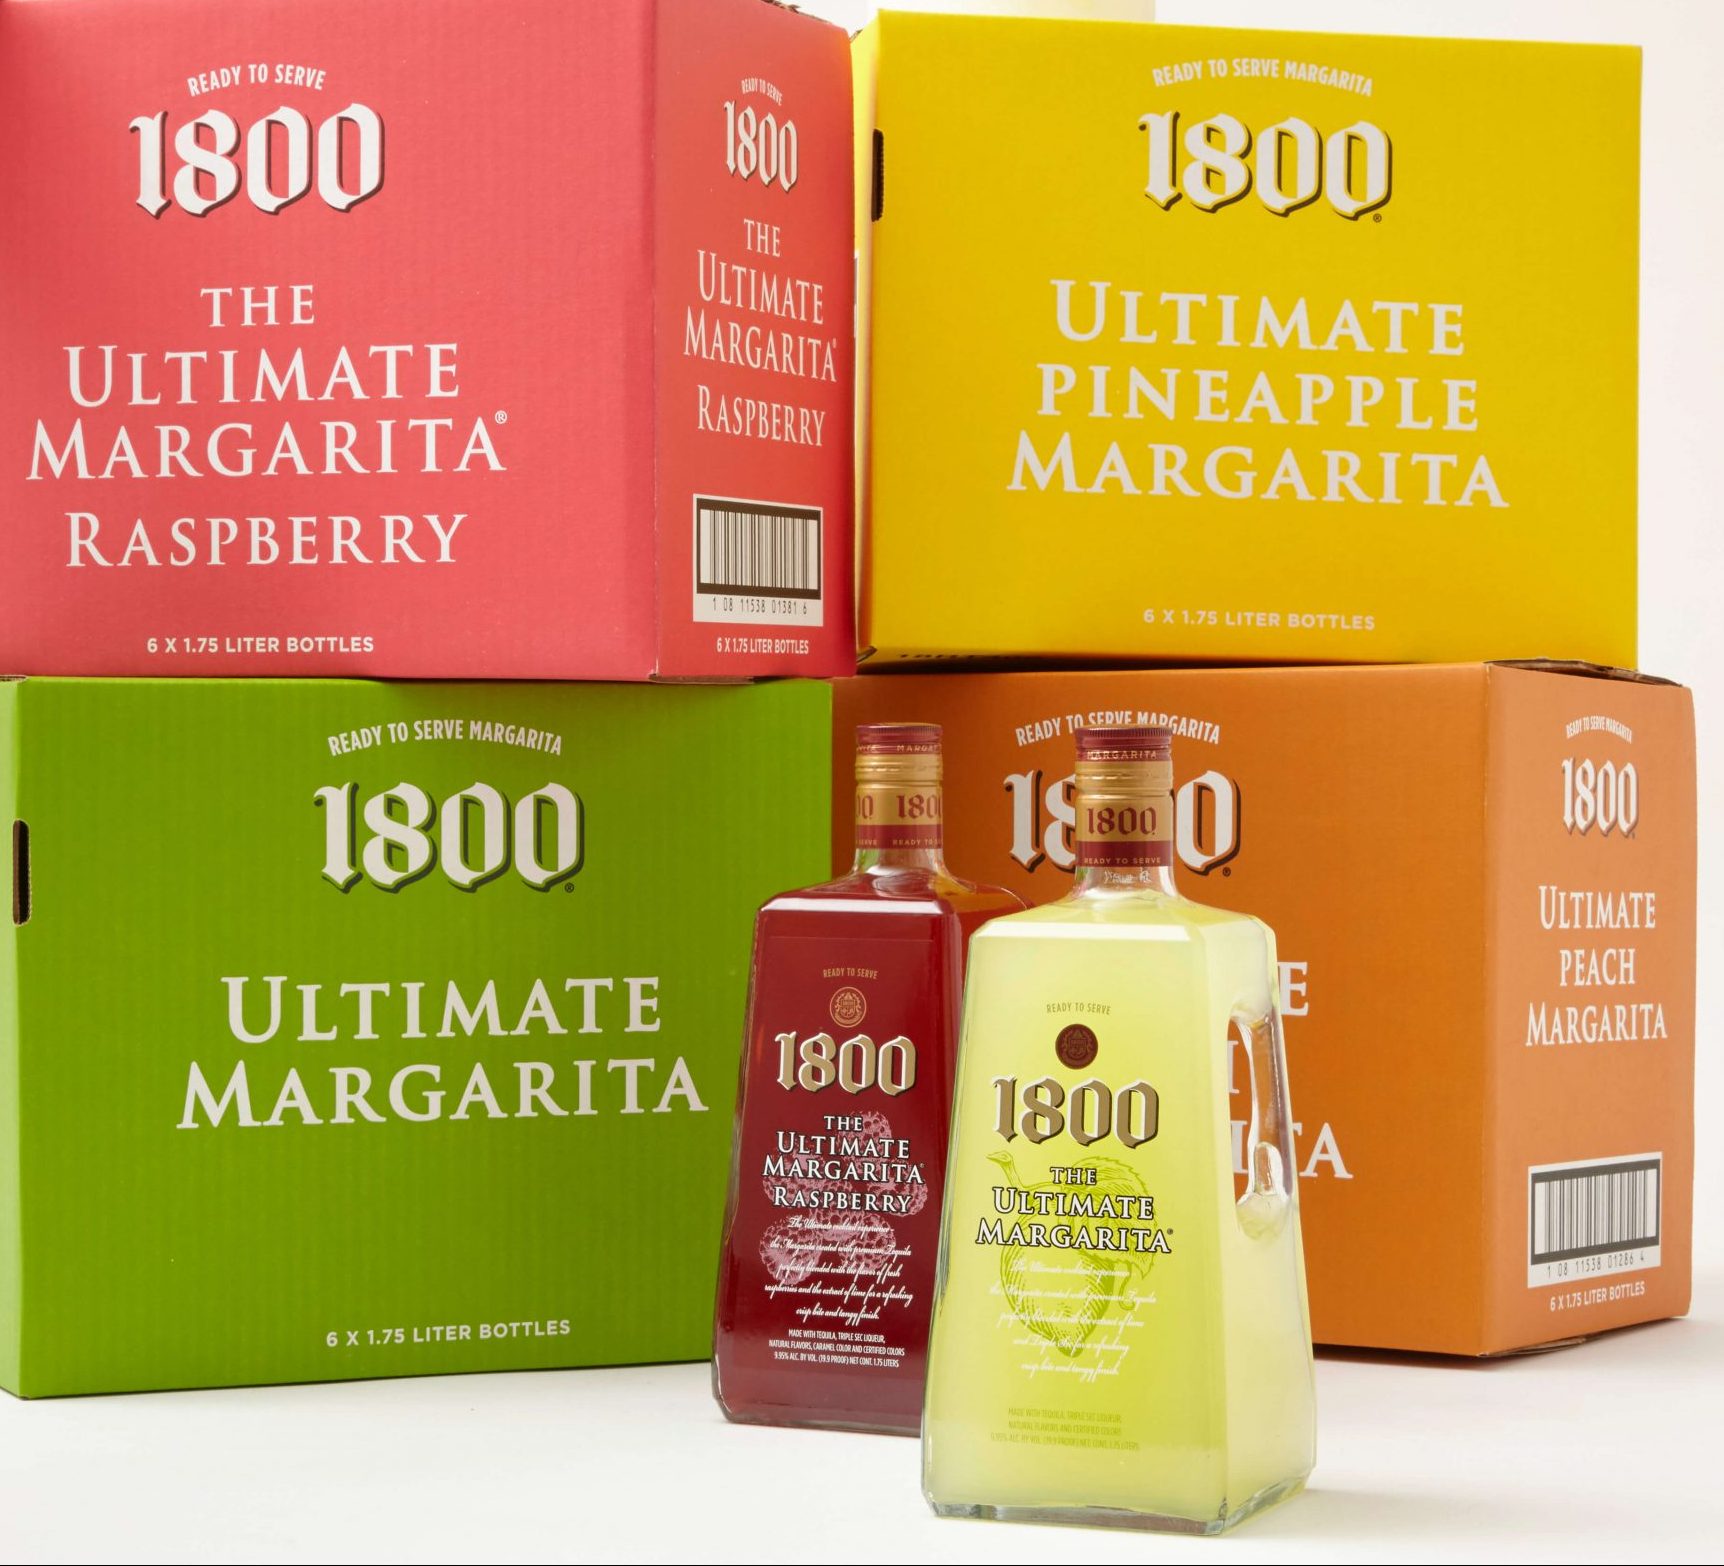 Branded margarita bottles and packaging